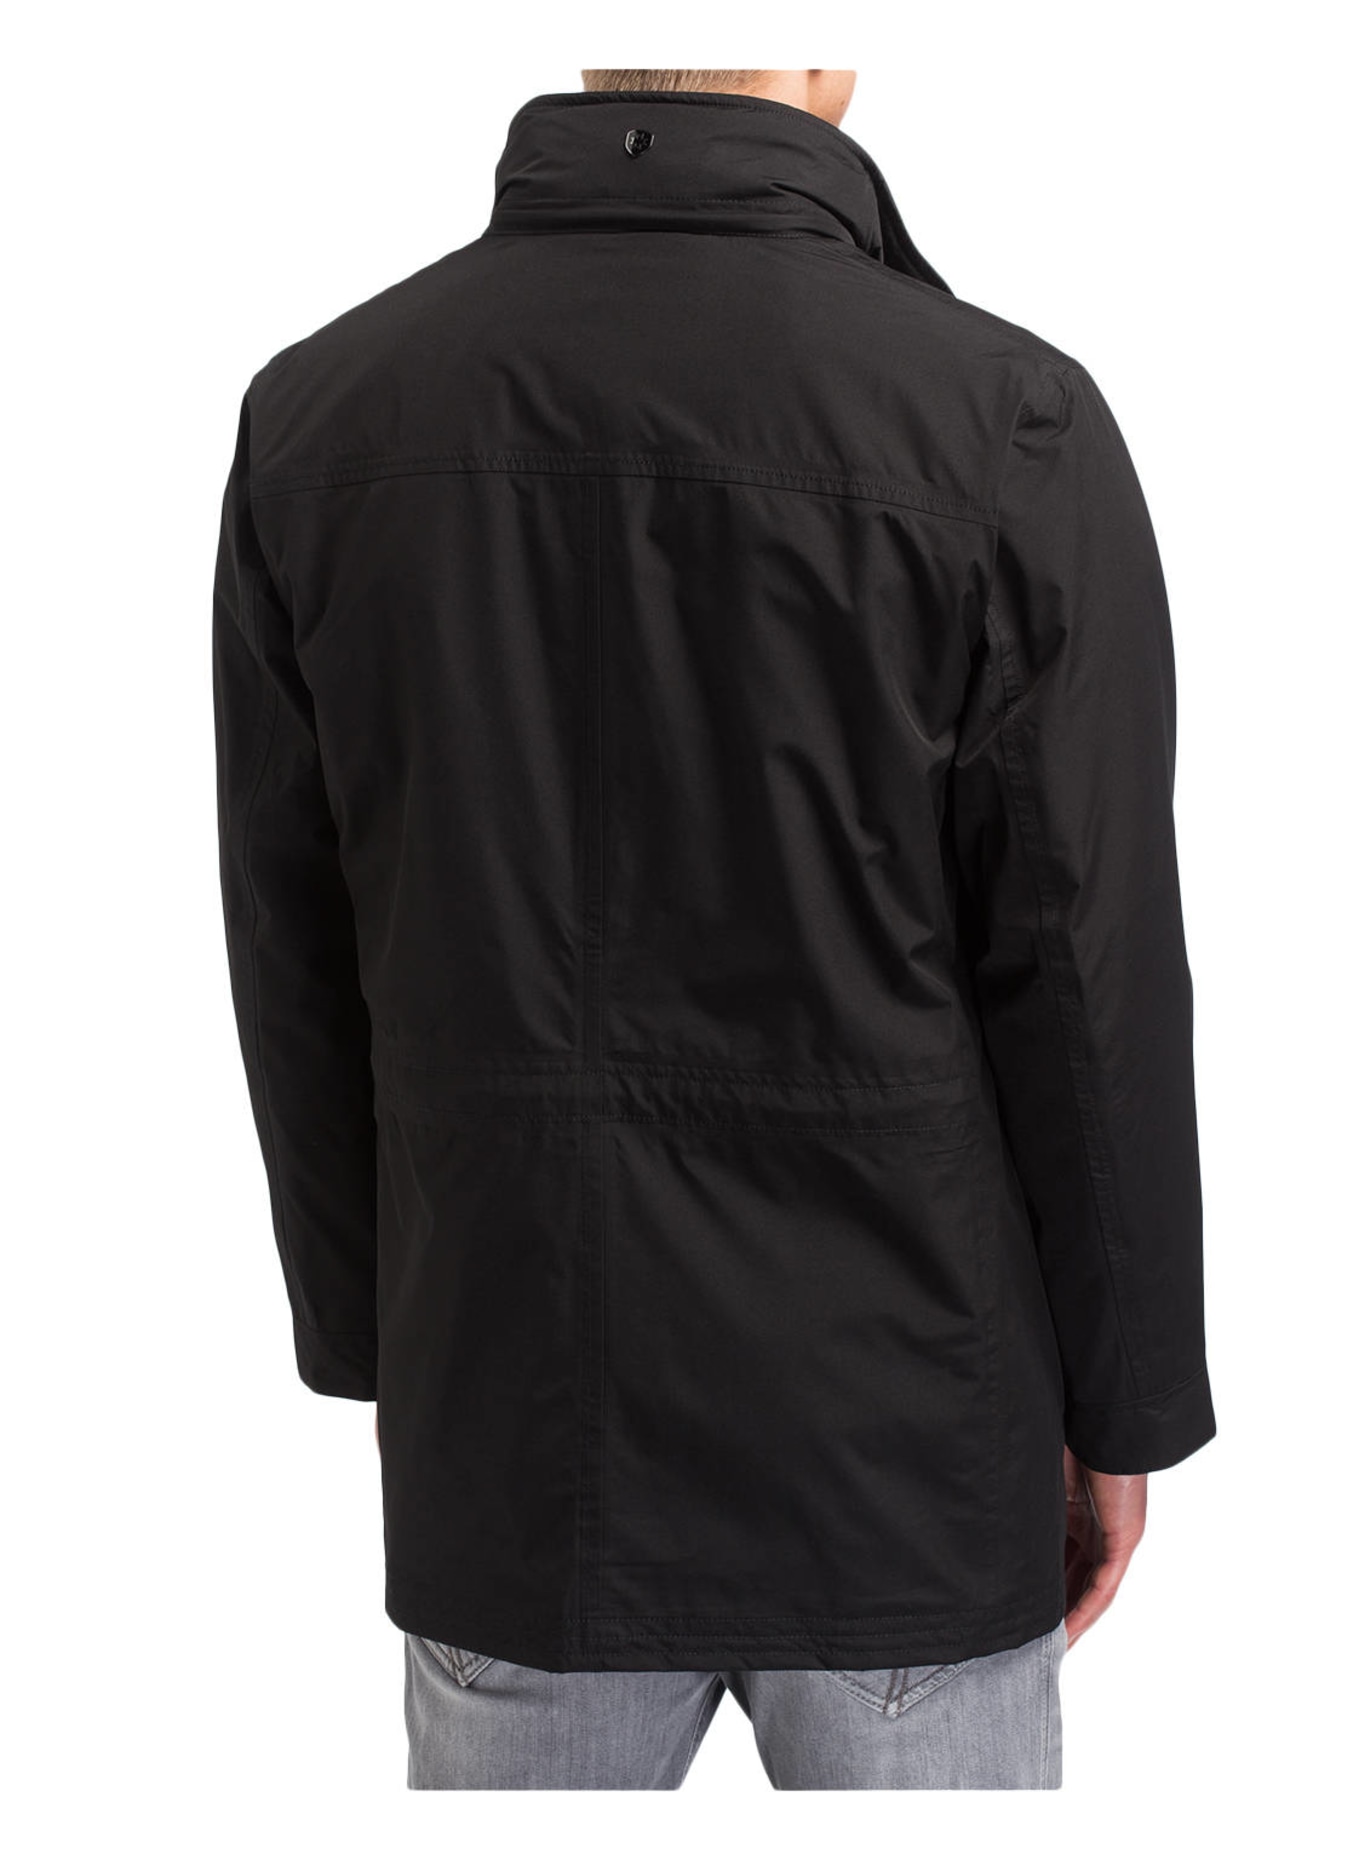 WELLENSTEYN Jacket ENGLAND SUMMER in black | Breuninger